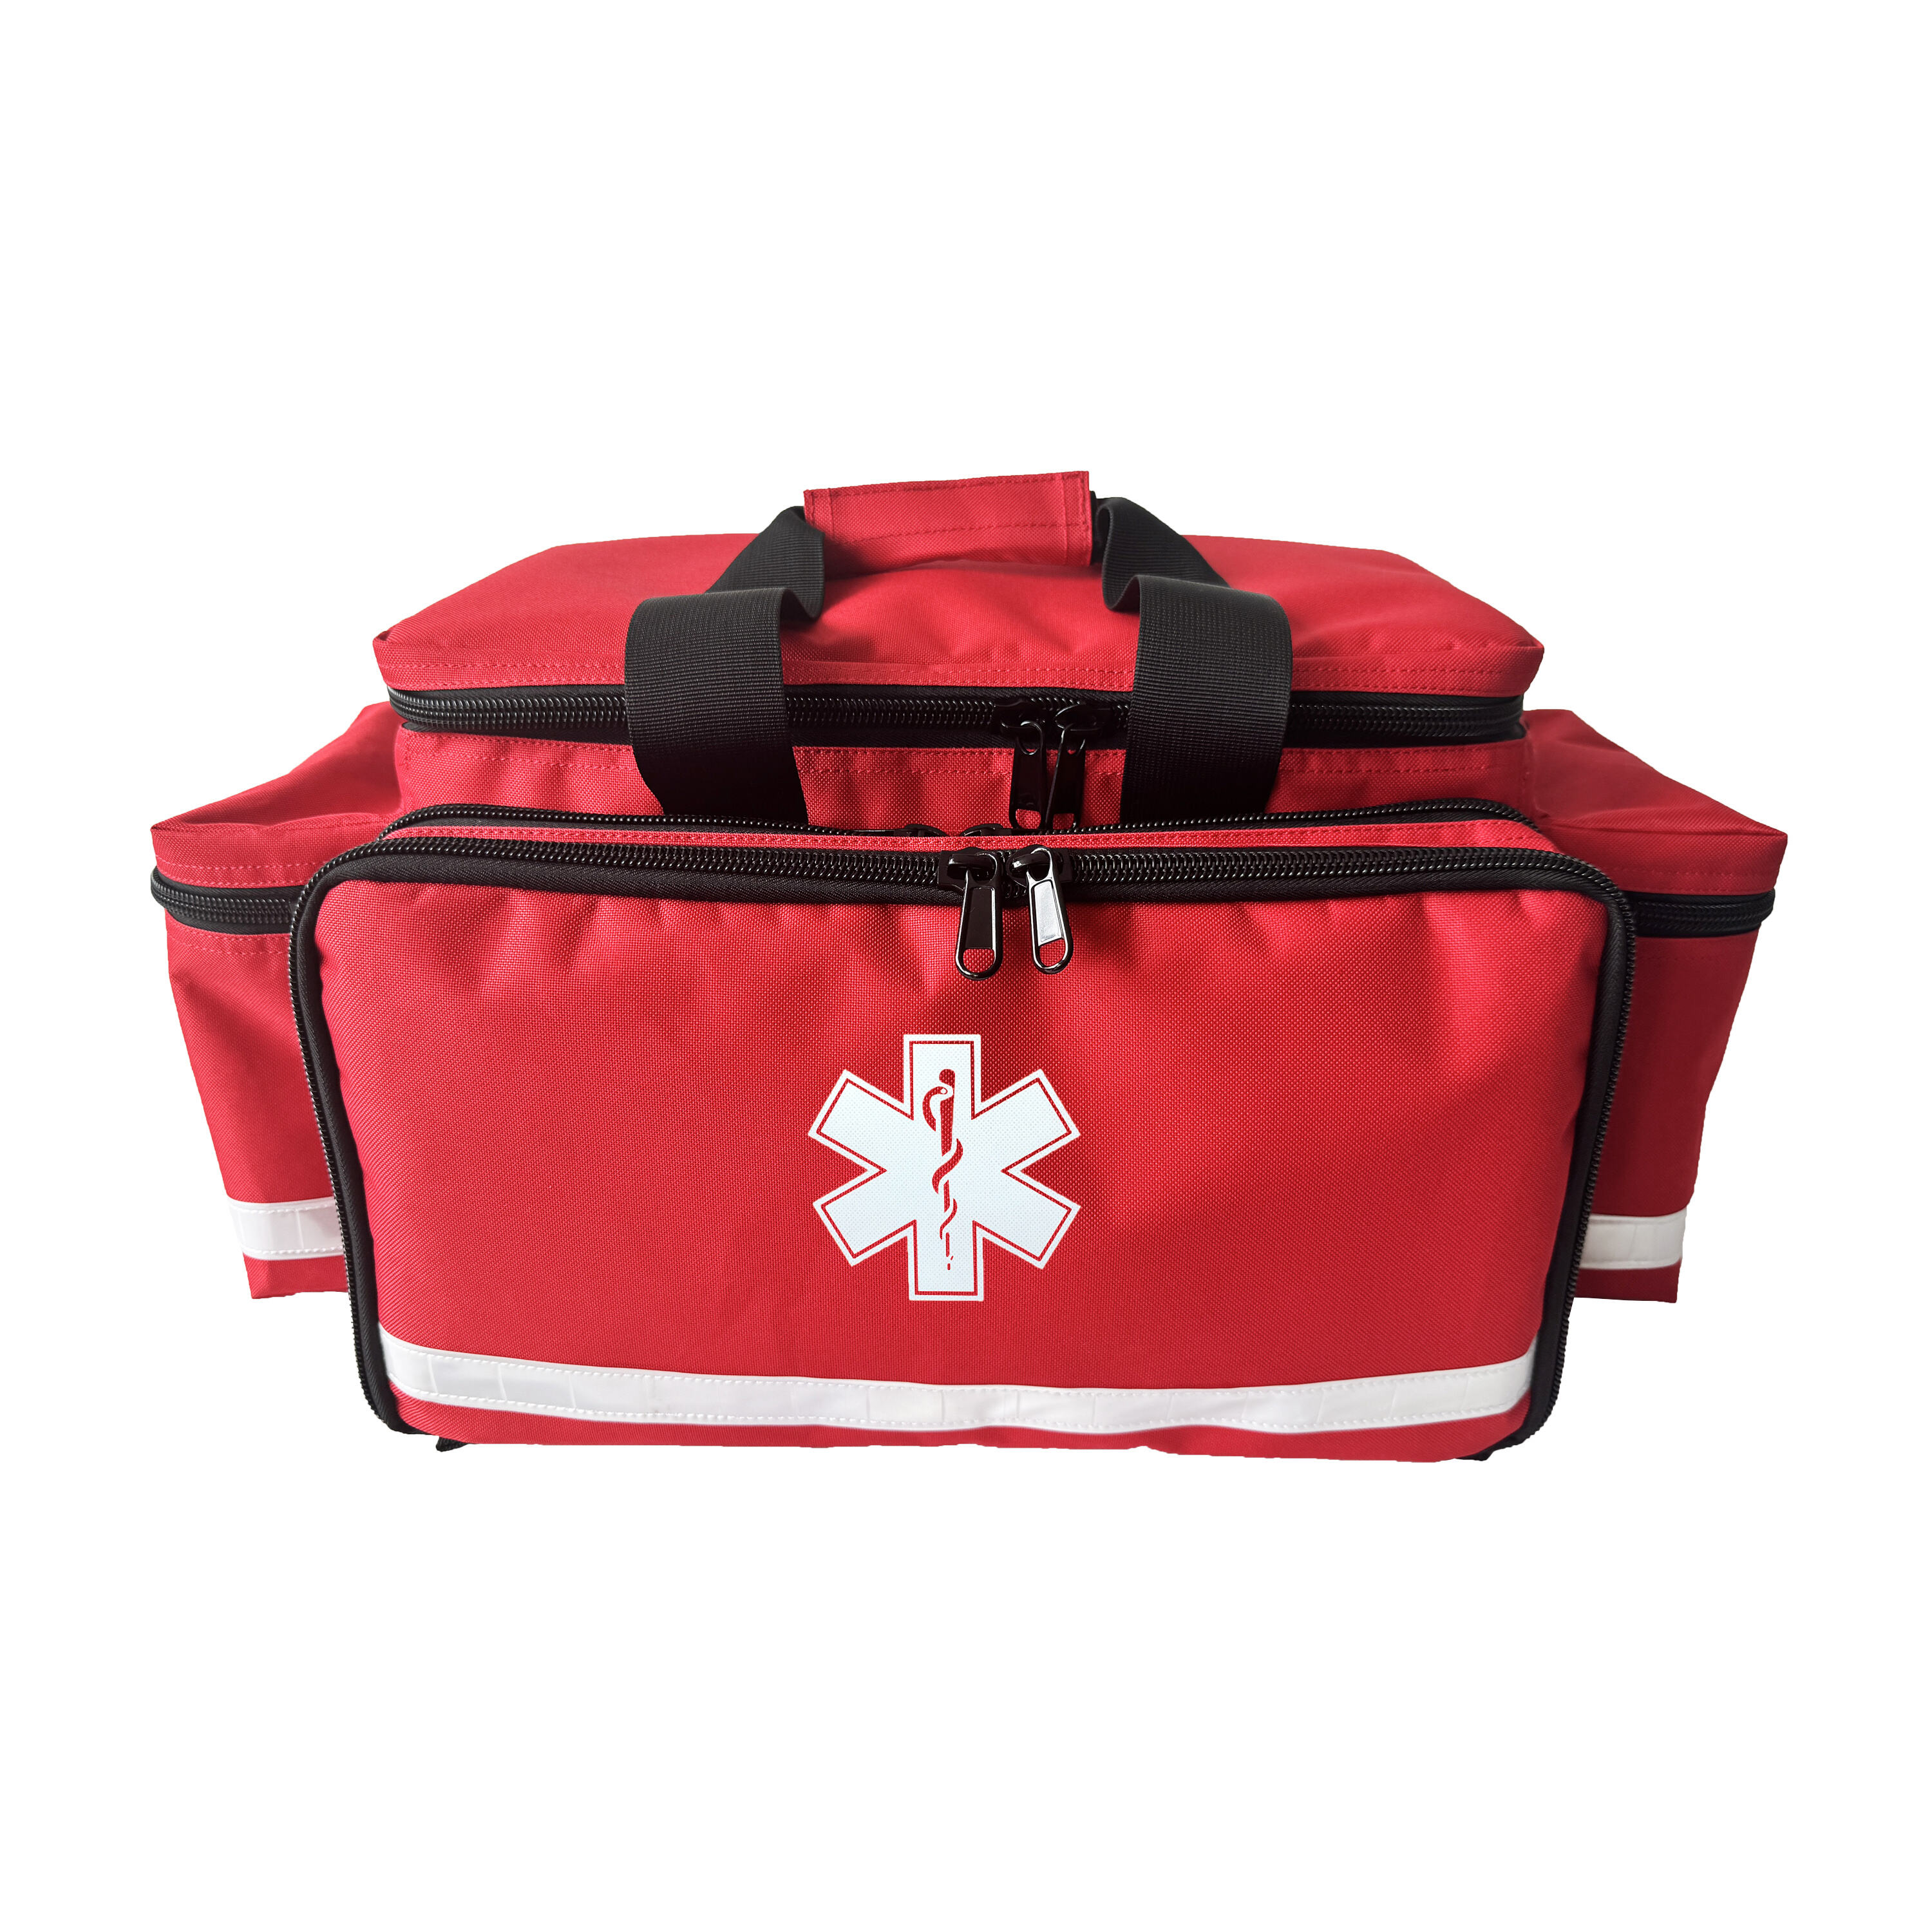 XH-CZ2 Medical Portable Emergency Preparedness Trauma Bag